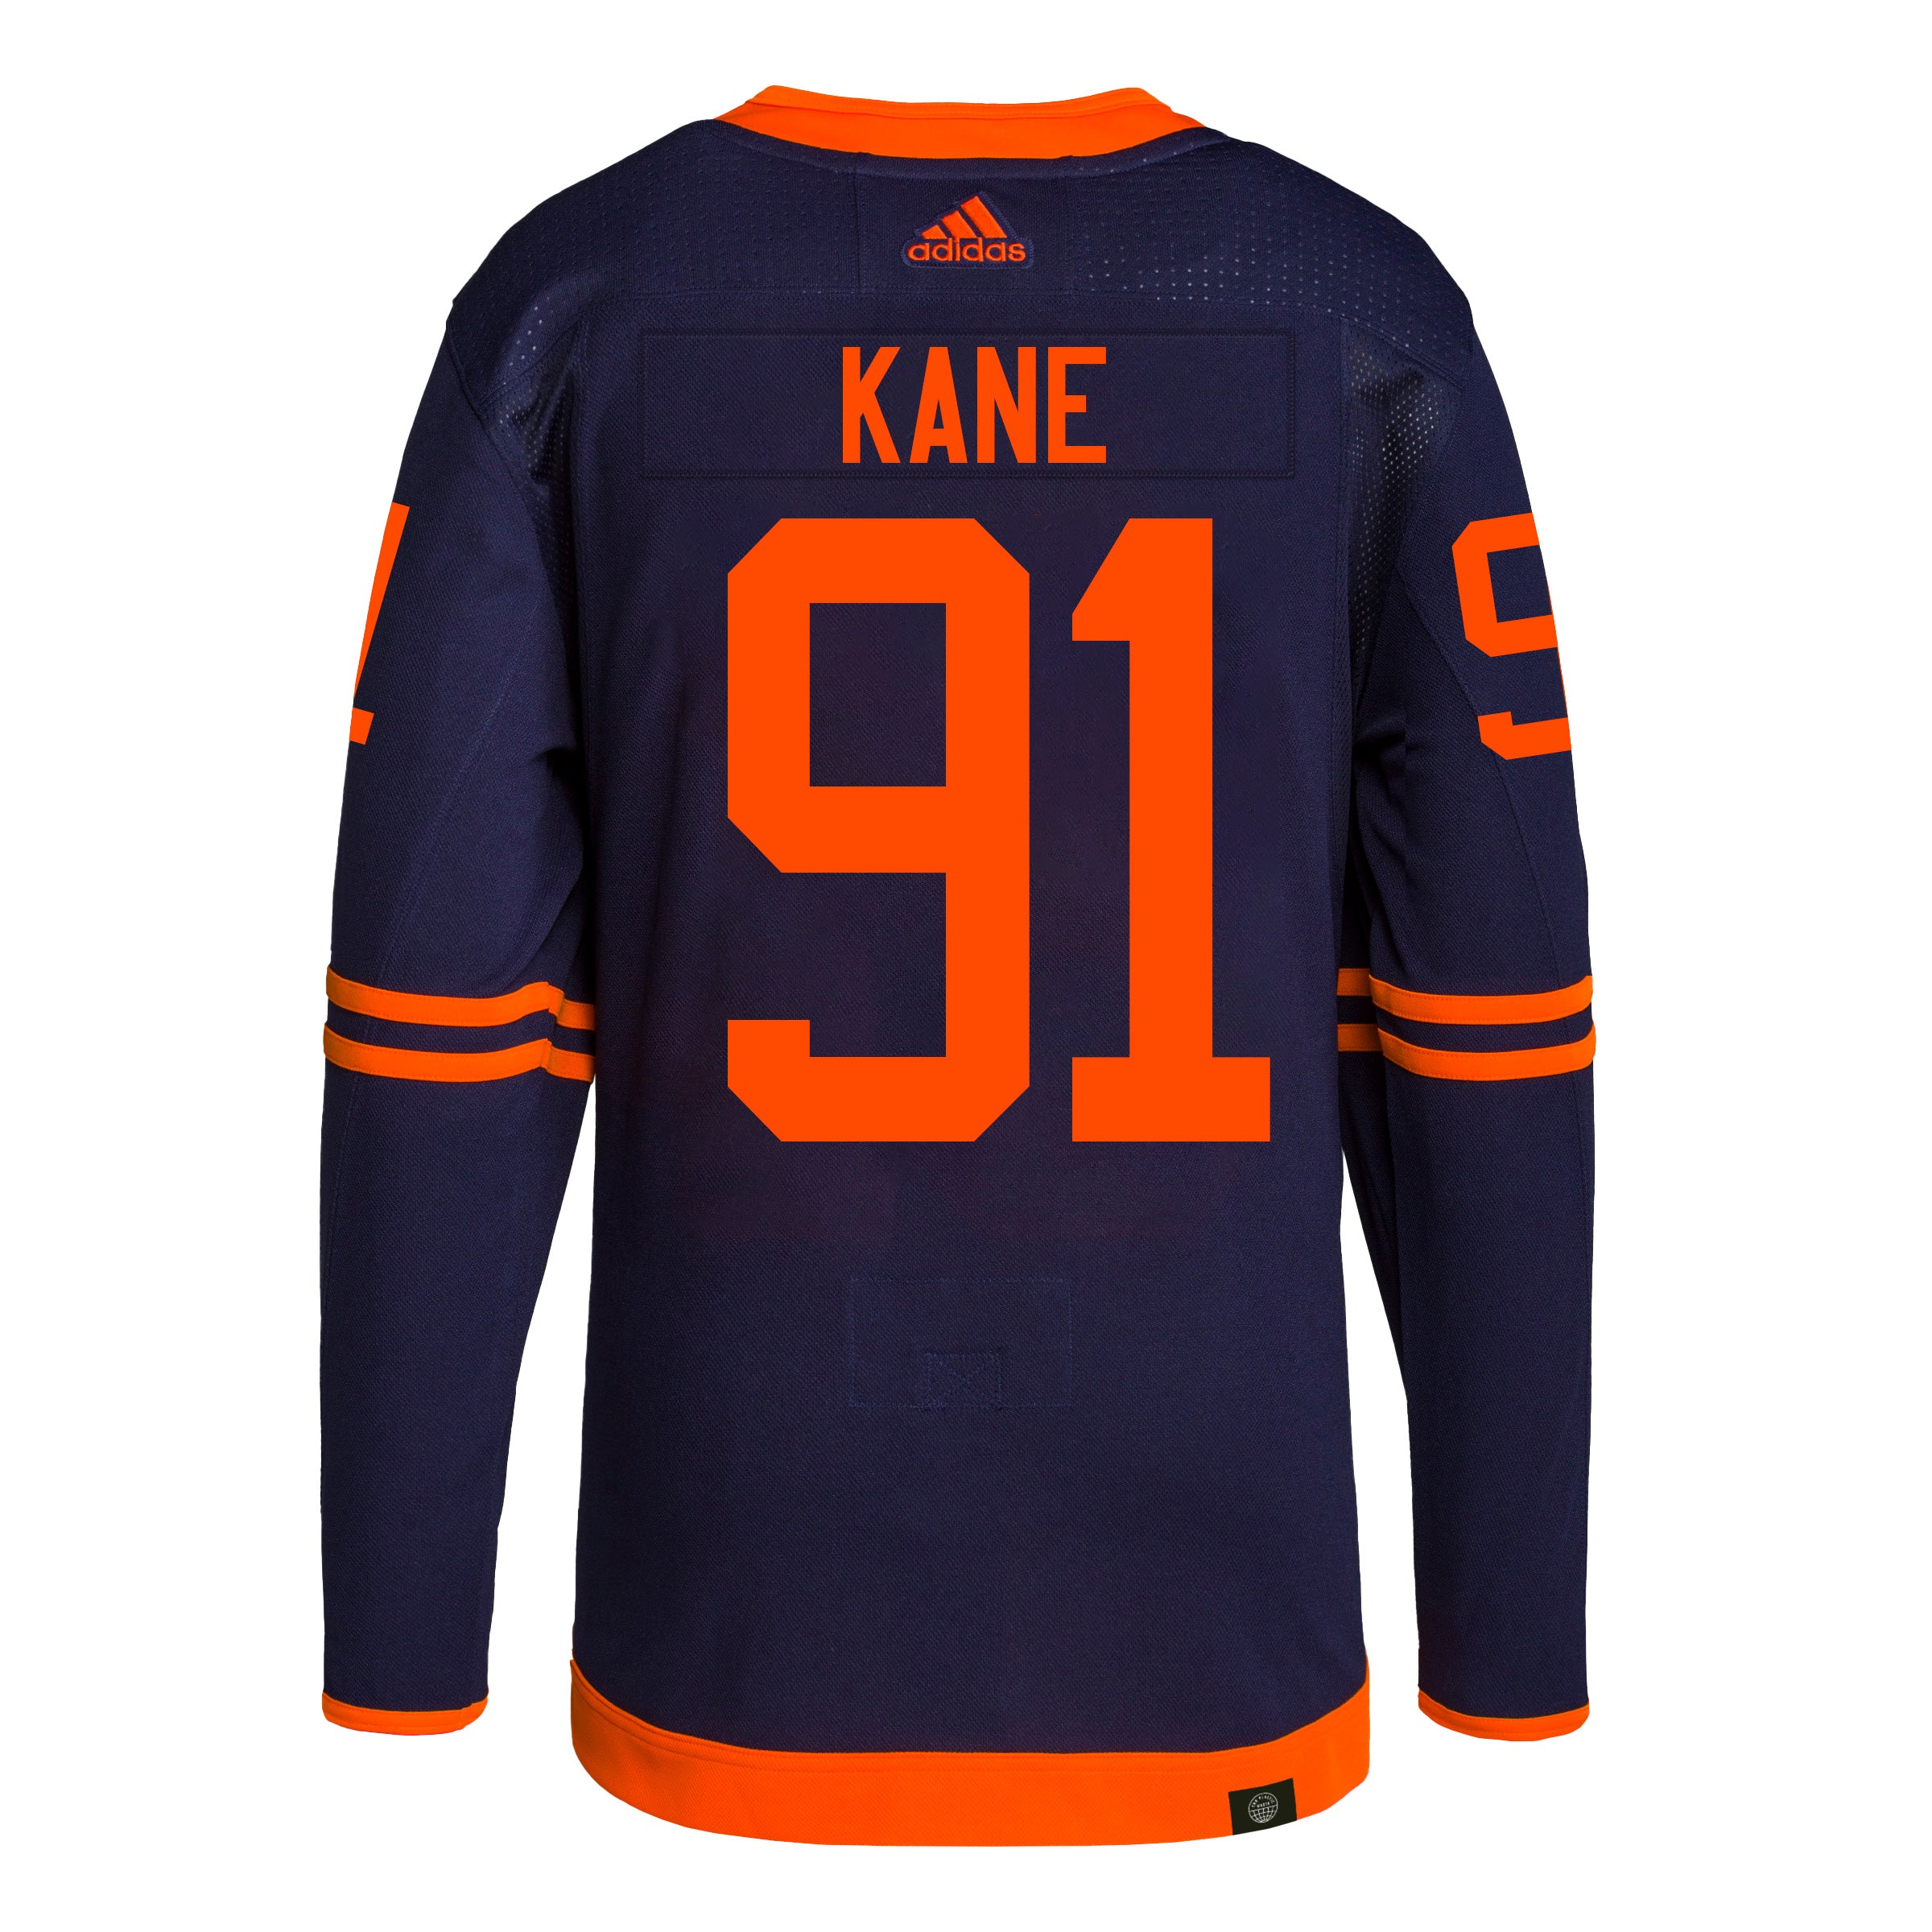 Evander Kane Autographed Edmonton Oilers Adidas Jersey